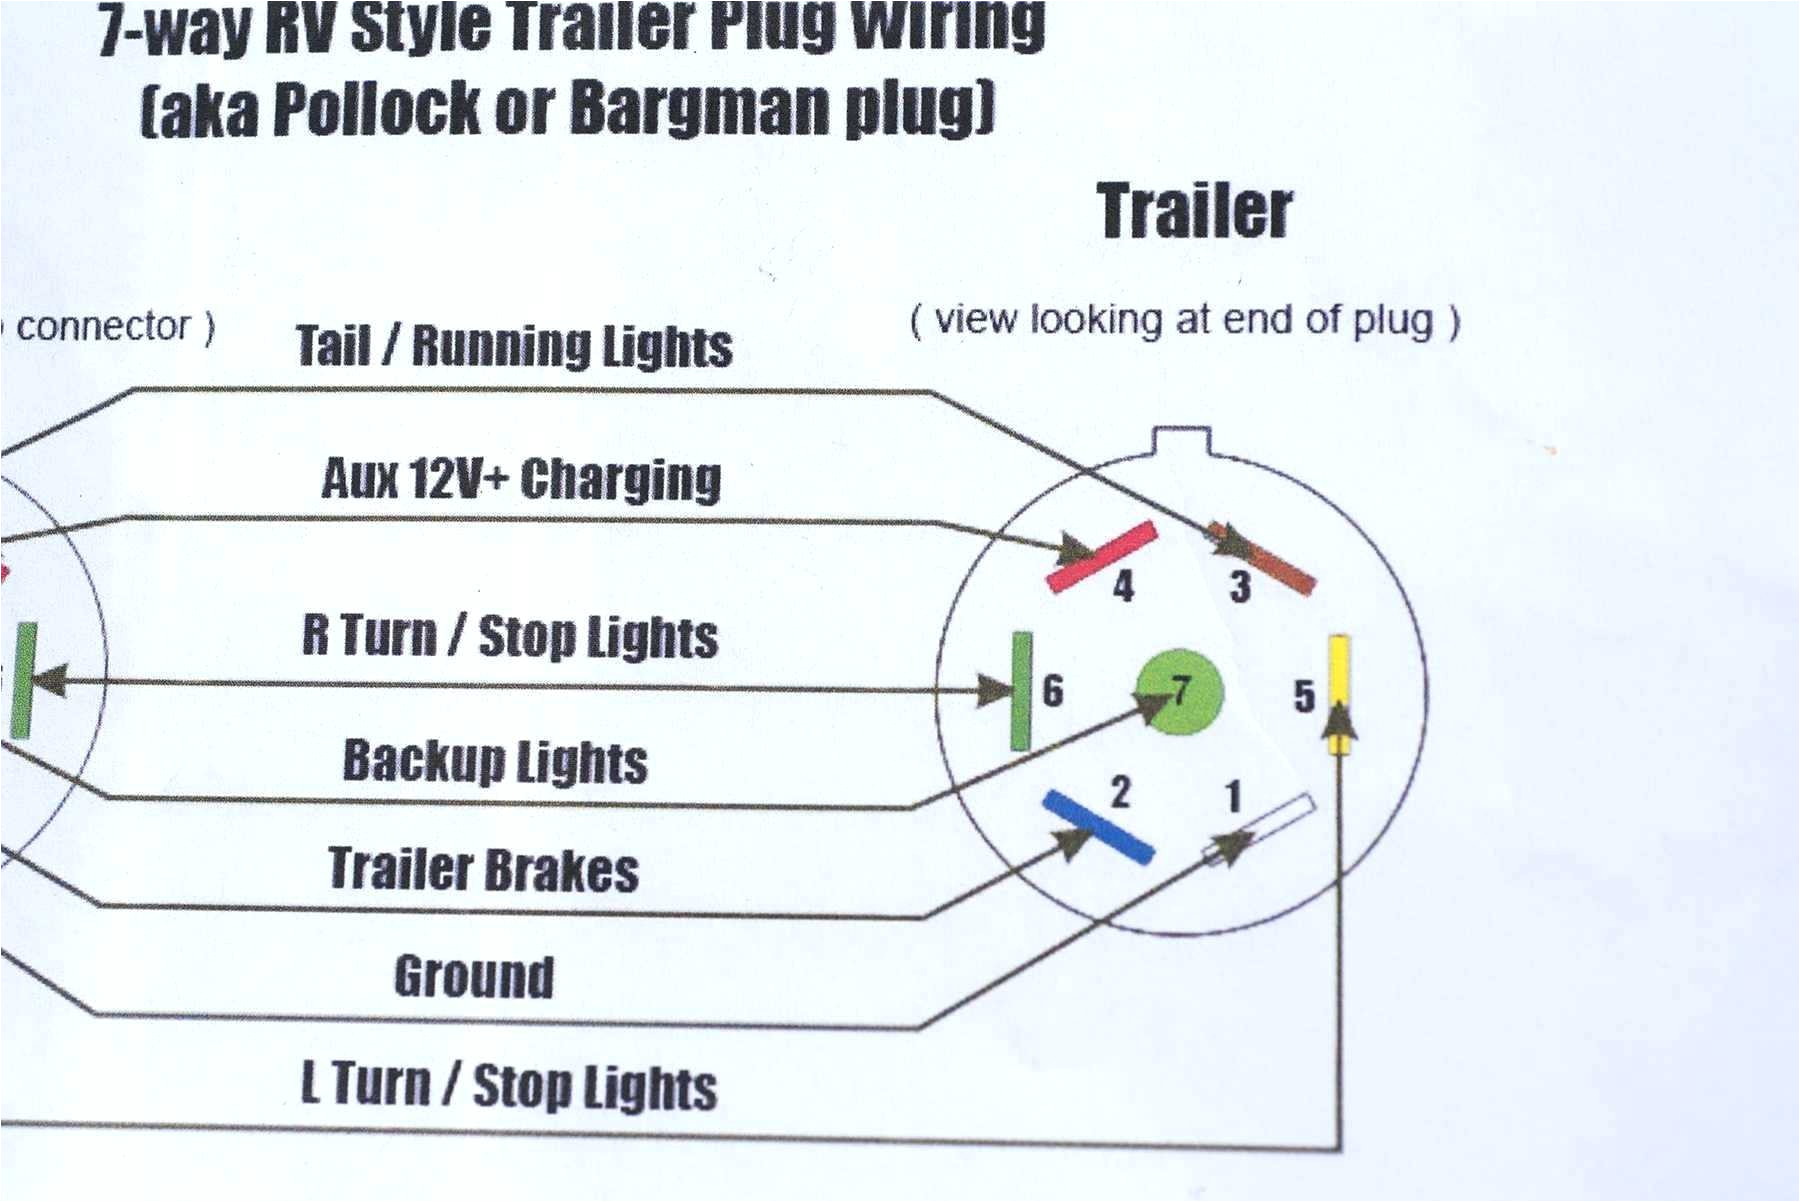 pin pin rv trailer plug wiring on pinterest book diagram schema rv 7 pin trailer wiring for pinterest